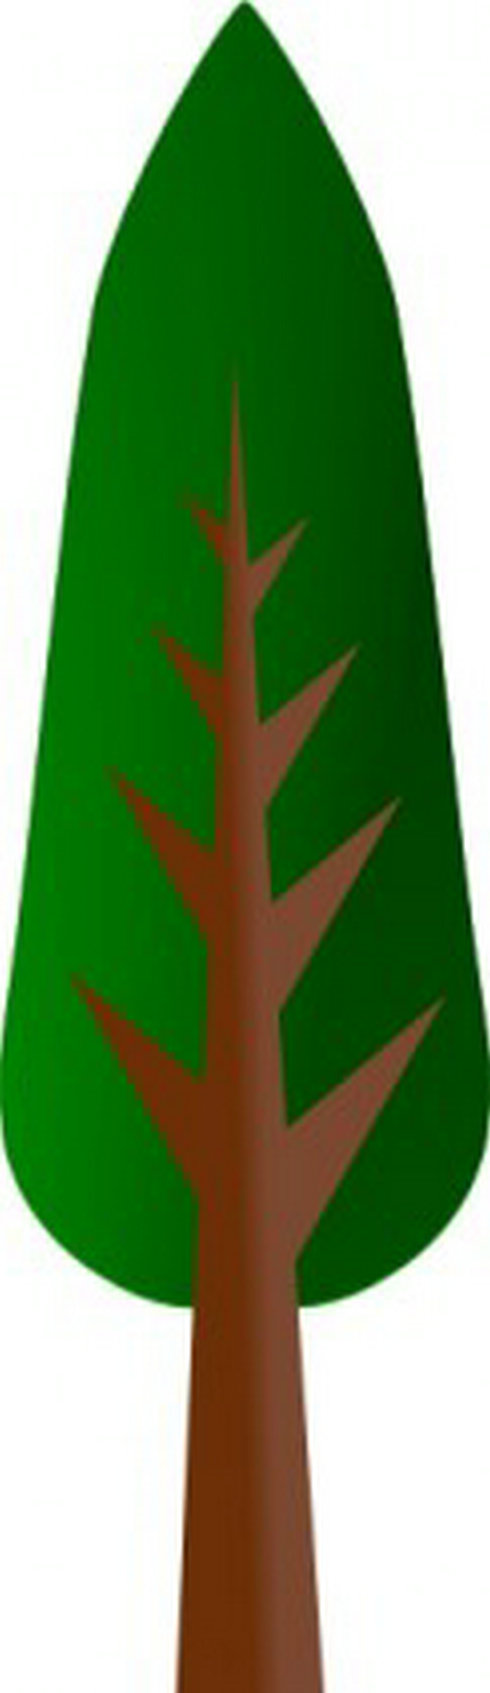 Tree Clip Art 12 | Free Vector Download - Graphics,